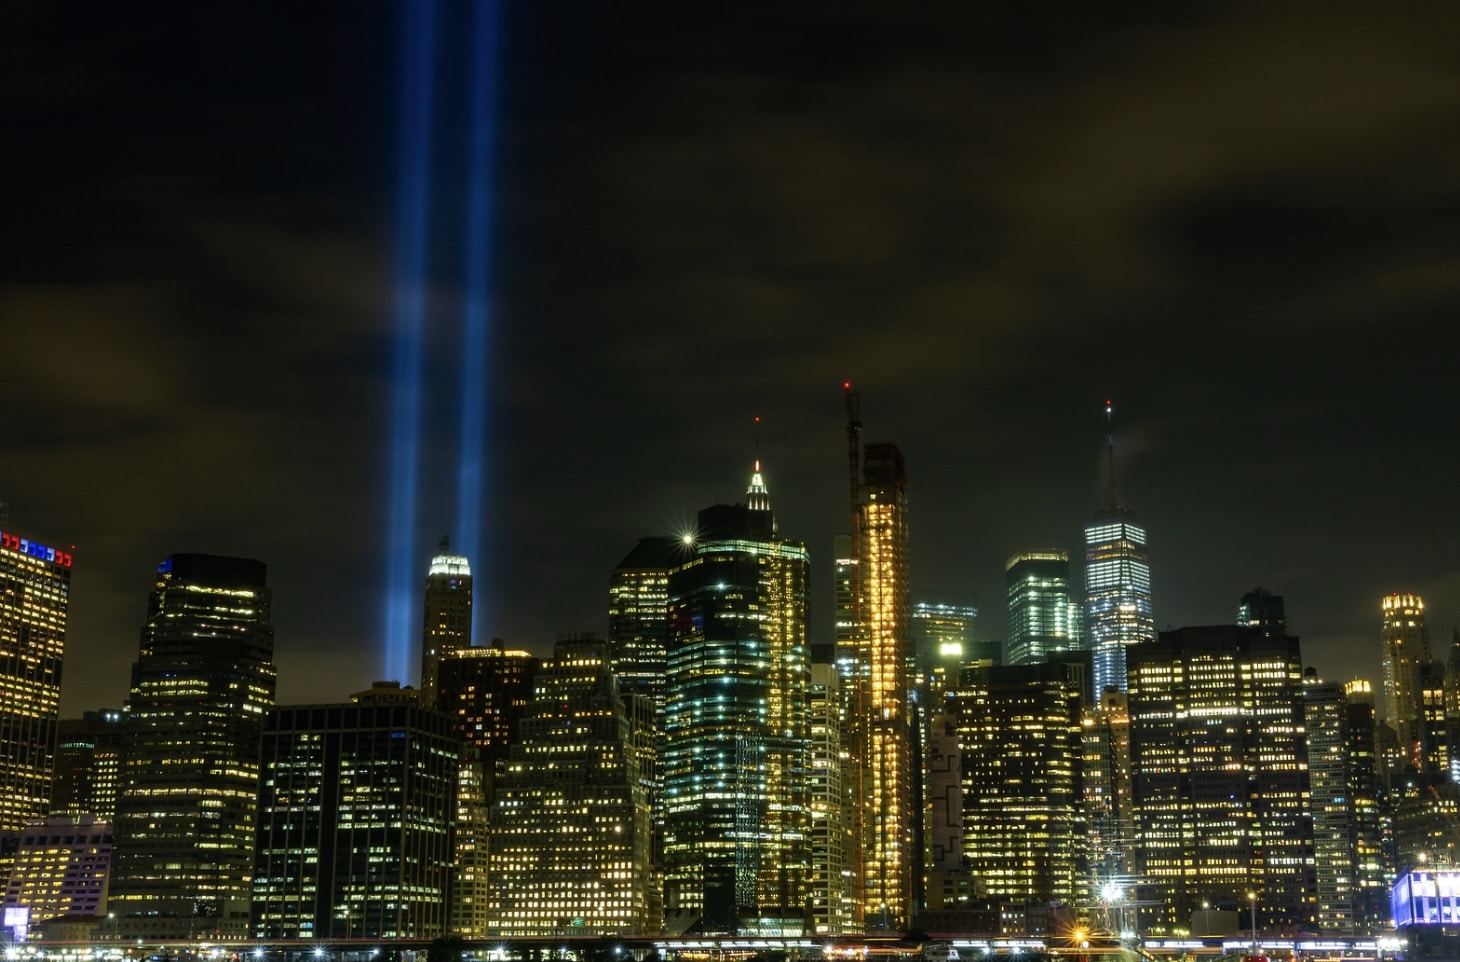 9:11 anniversary attack foiled